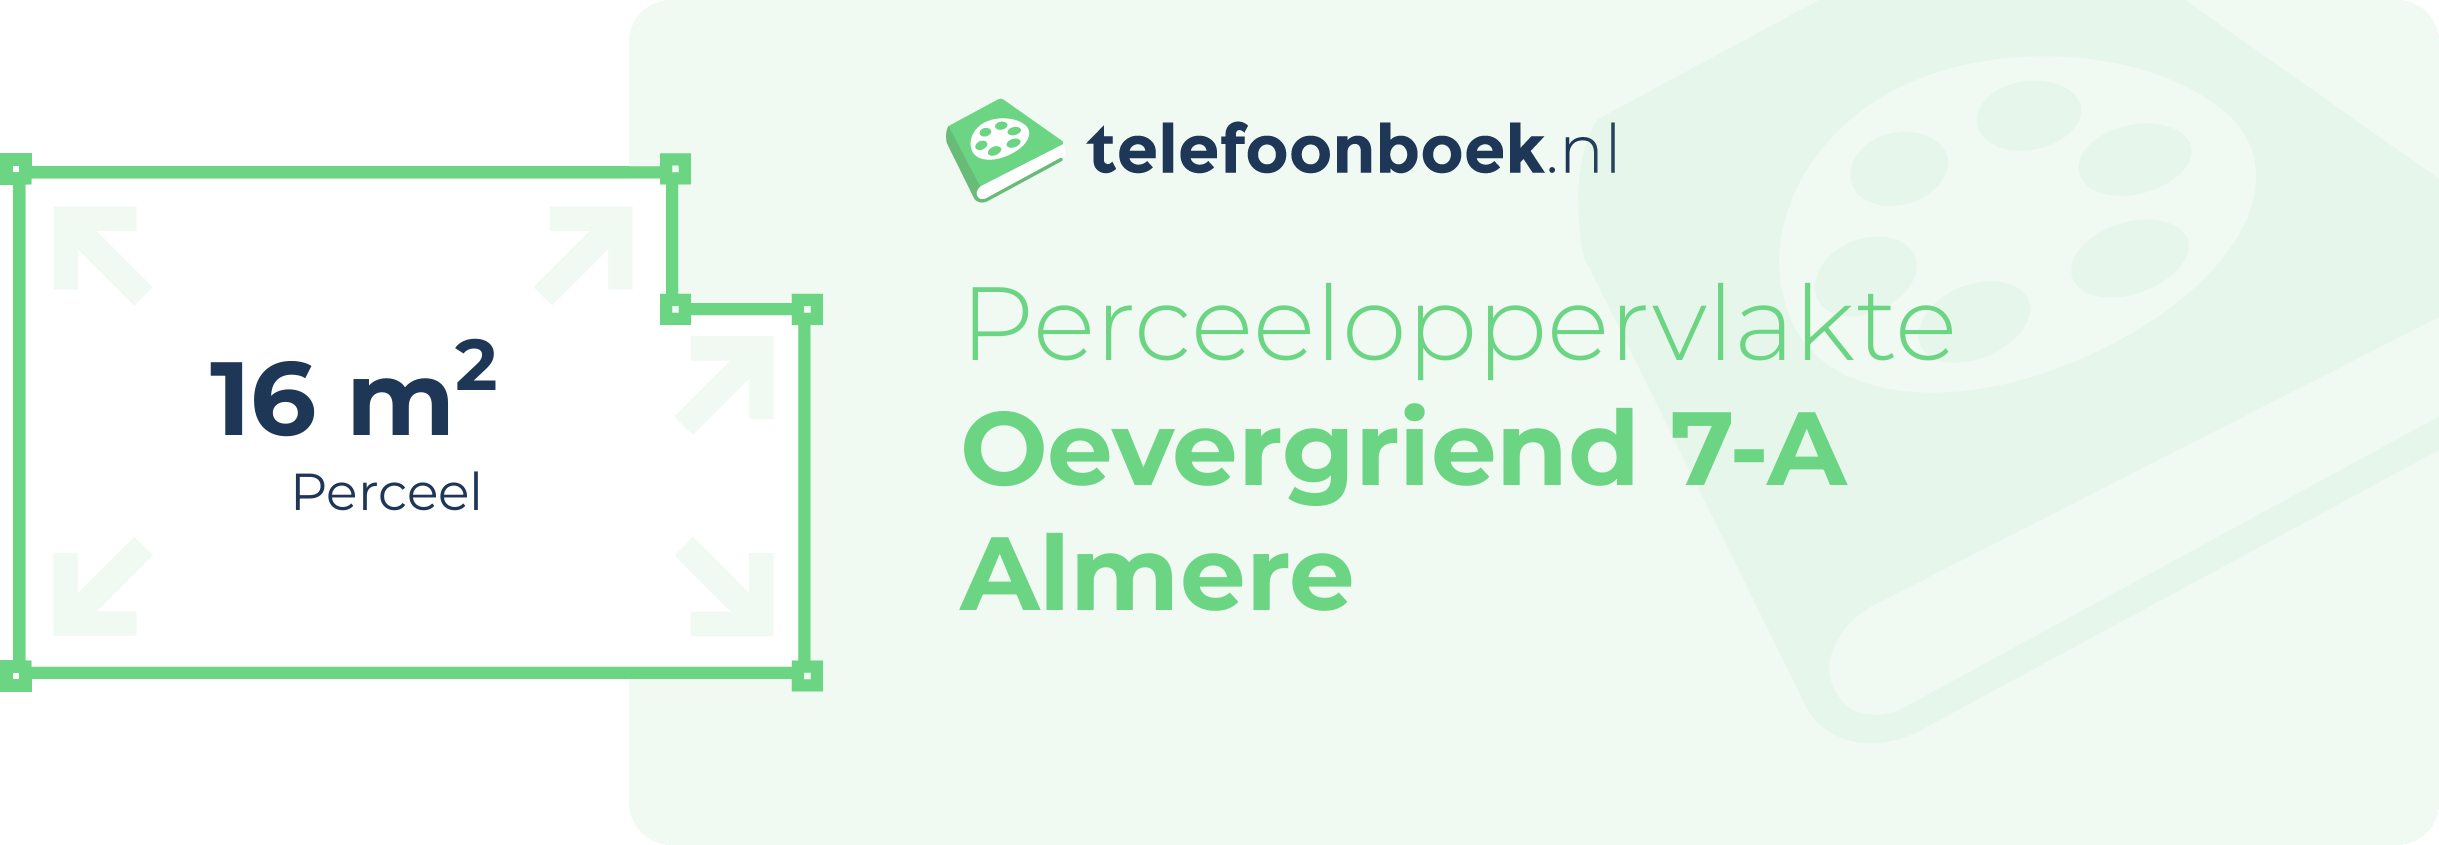 Perceeloppervlakte Oevergriend 7-A Almere